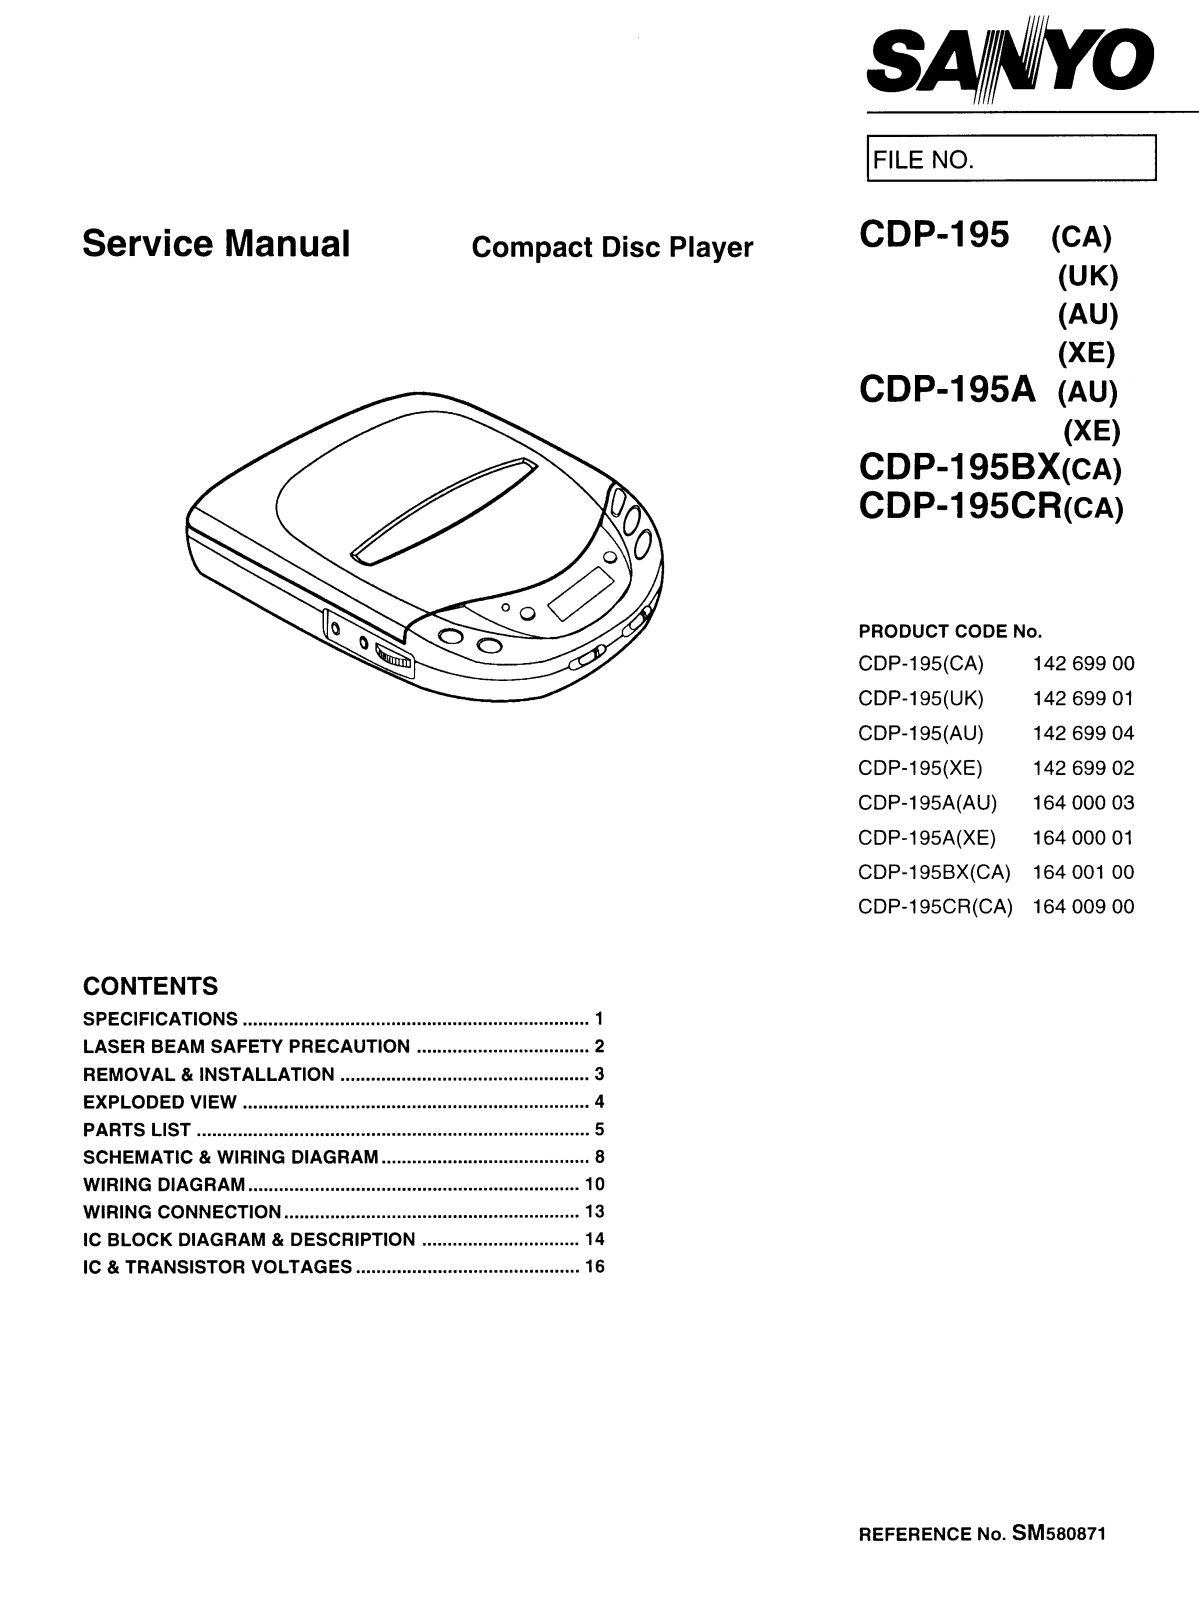 Sanyo CDP-195CR, CDP-195BX, CDP-195A Service Manual